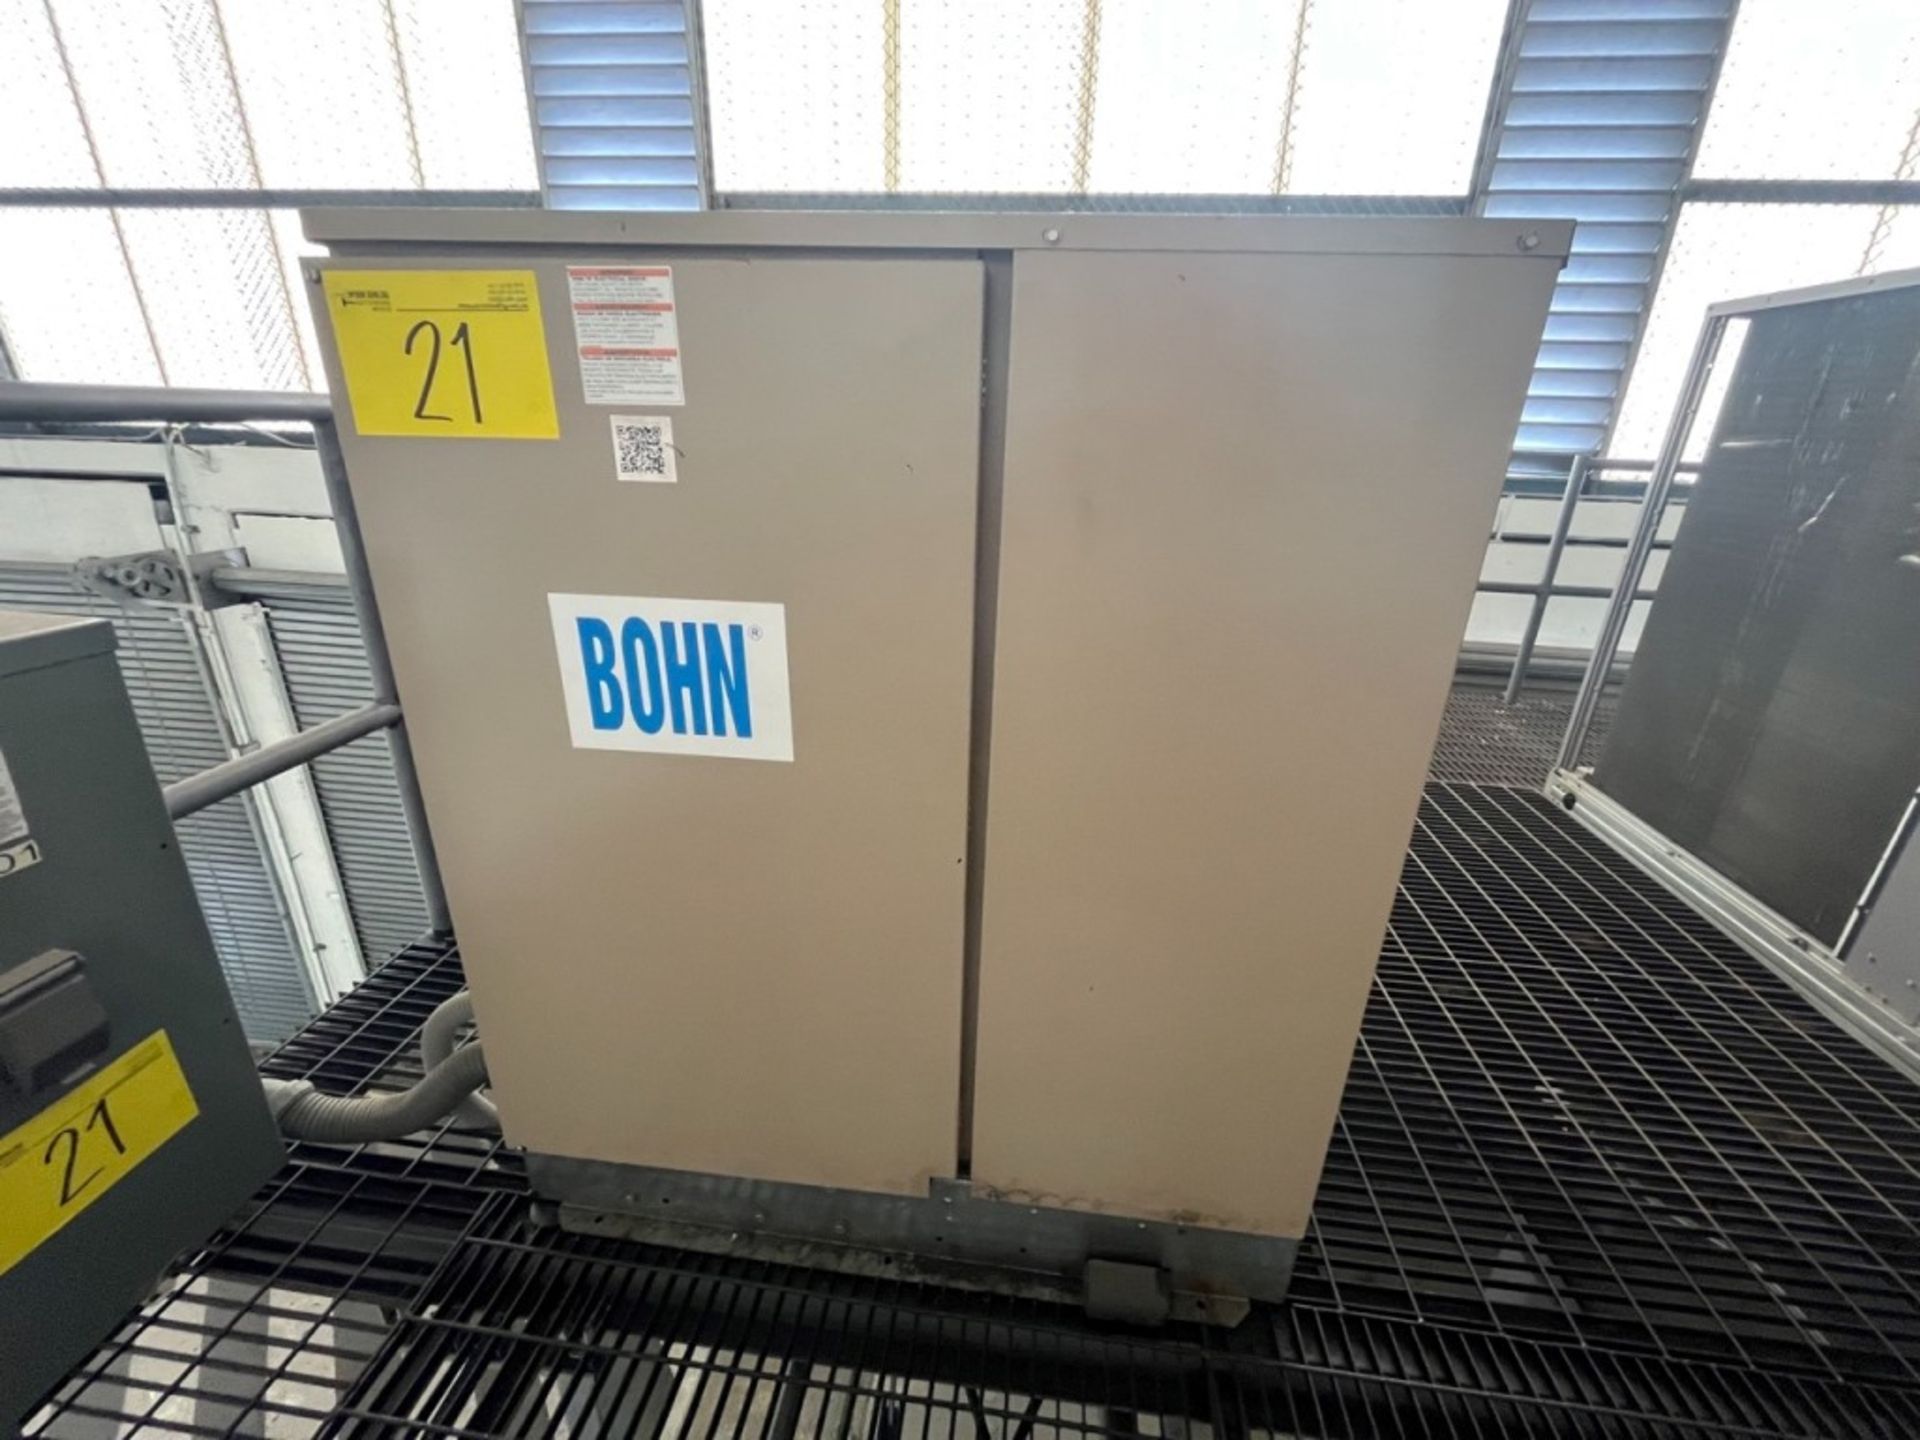 (NEW) Bohn refrigeration condensing unit, Model MBZX1500L6C, Serial No. M21K02616, 208-230V 60 Hz - Image 6 of 22